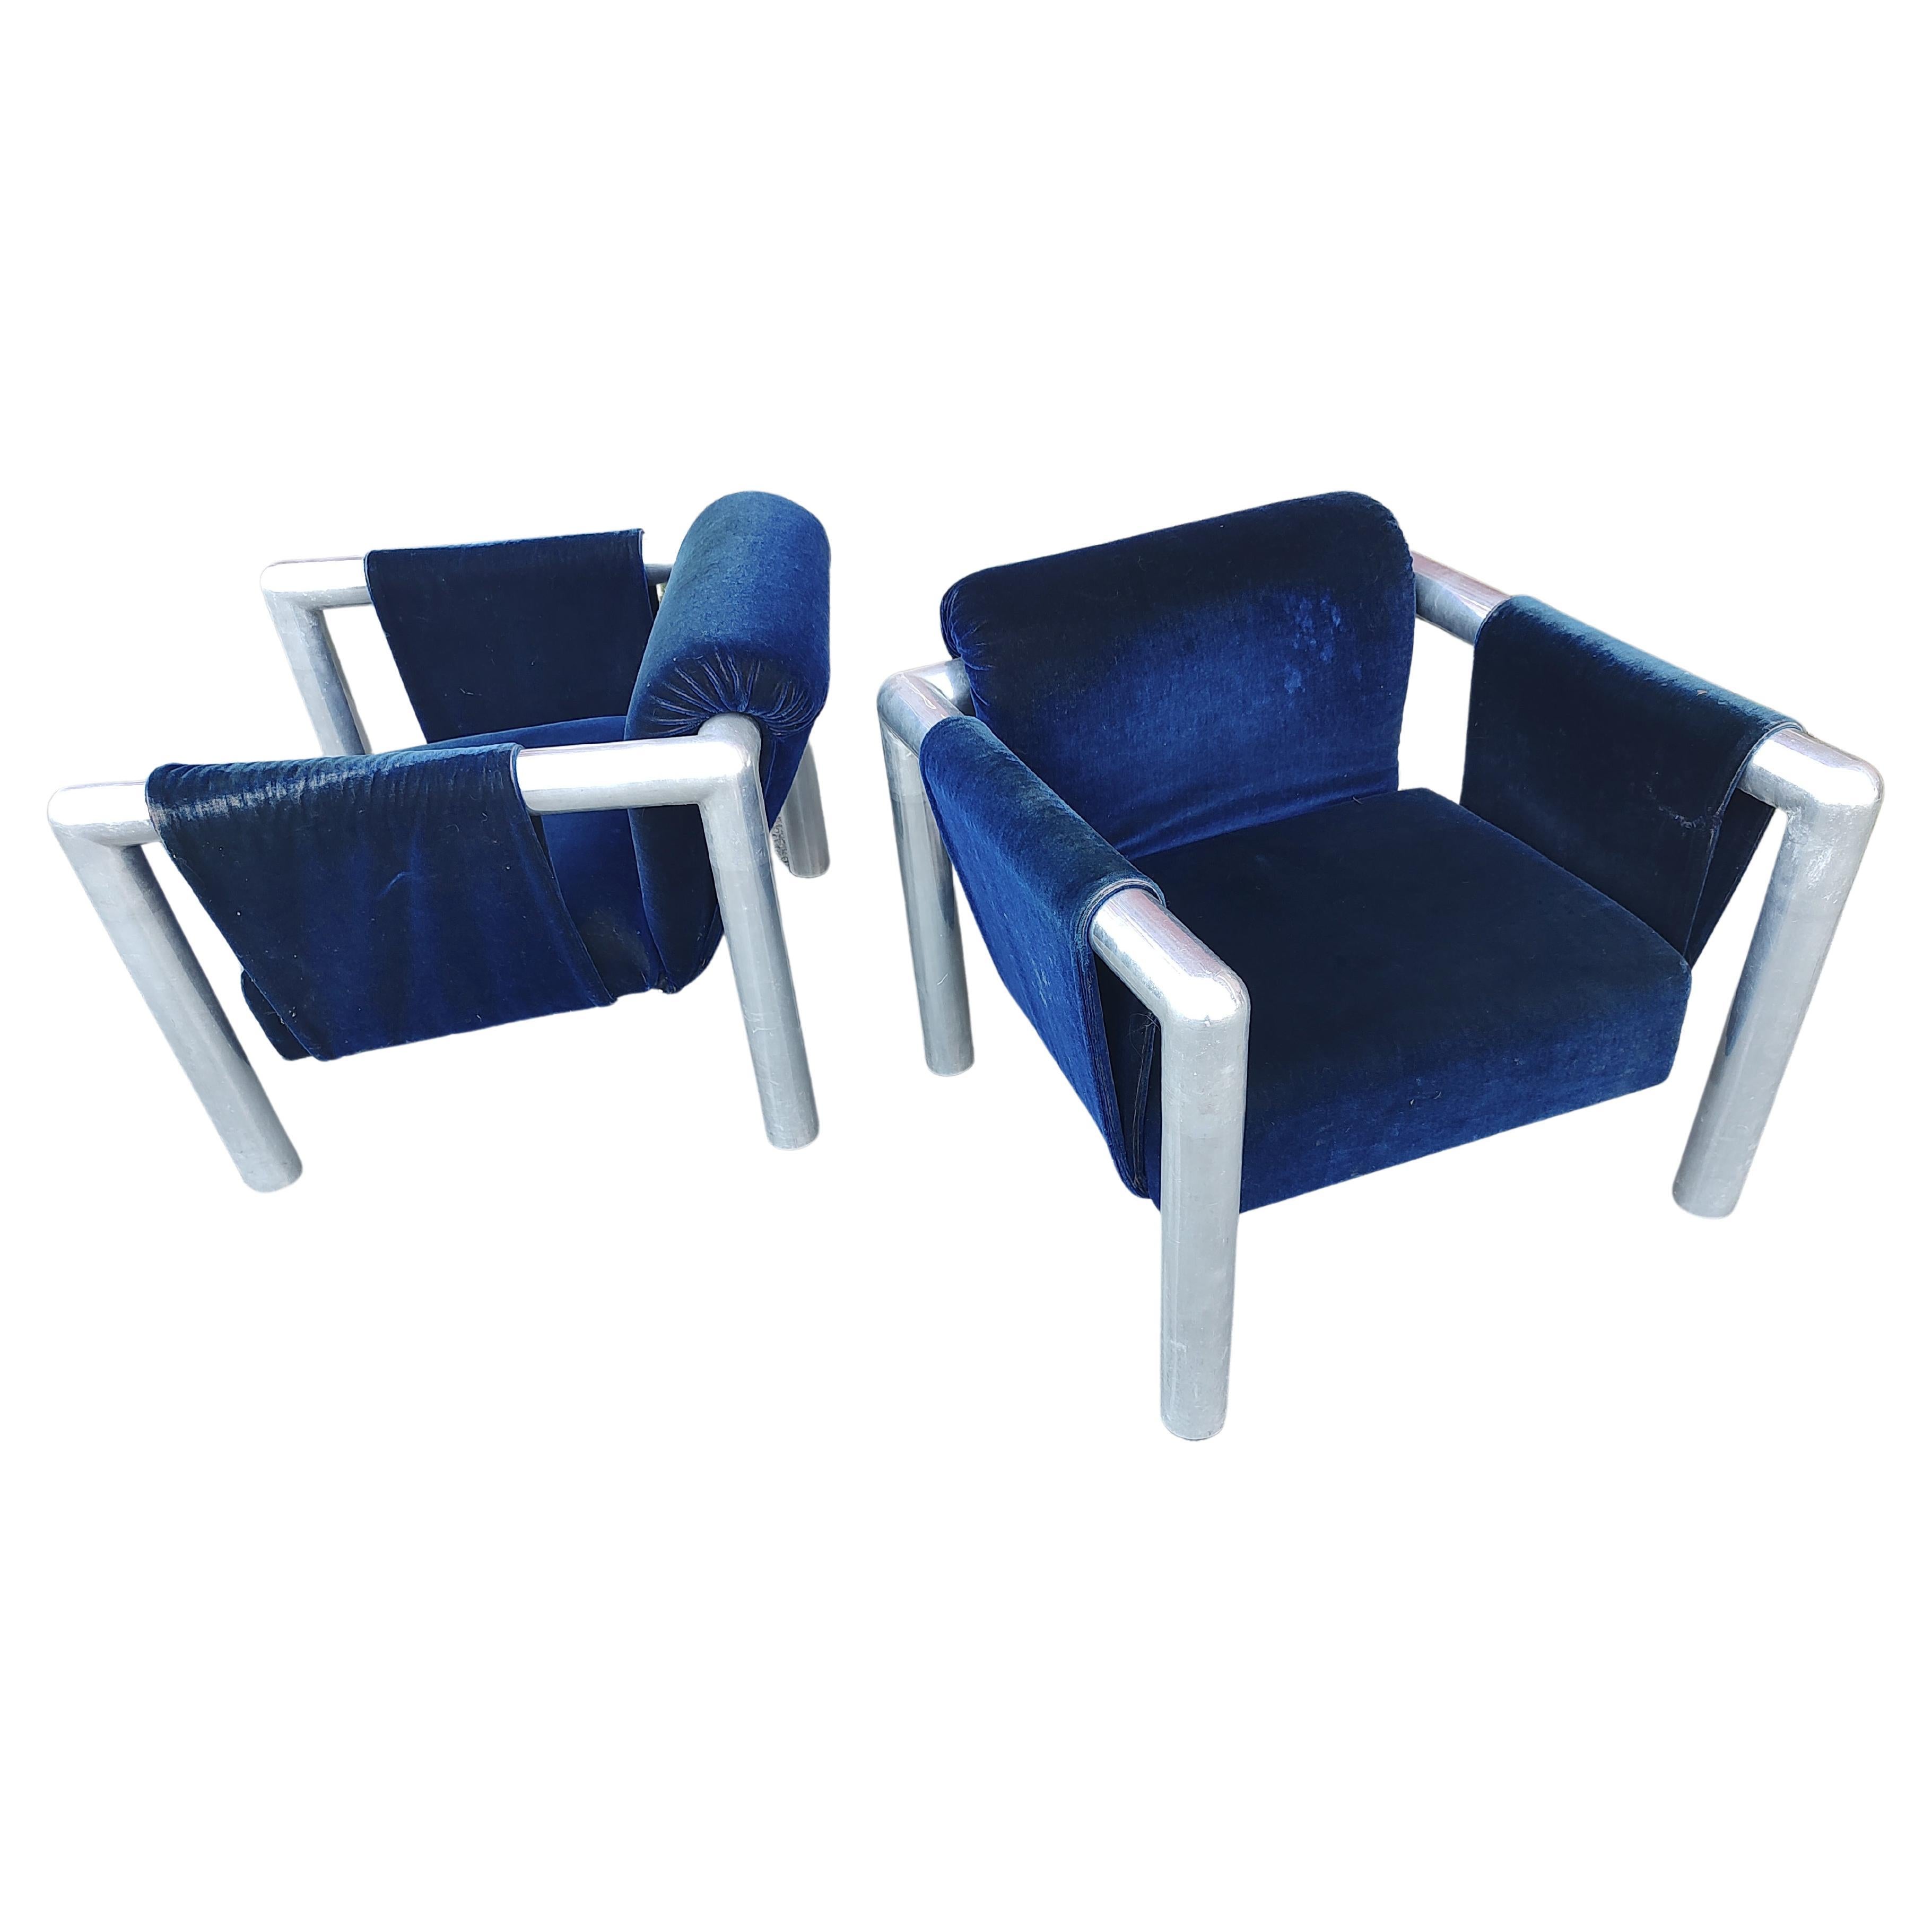 Pair of Mid-Century Modern Tubular Sling Chairs by John Mascheroni model 424 For Sale 1